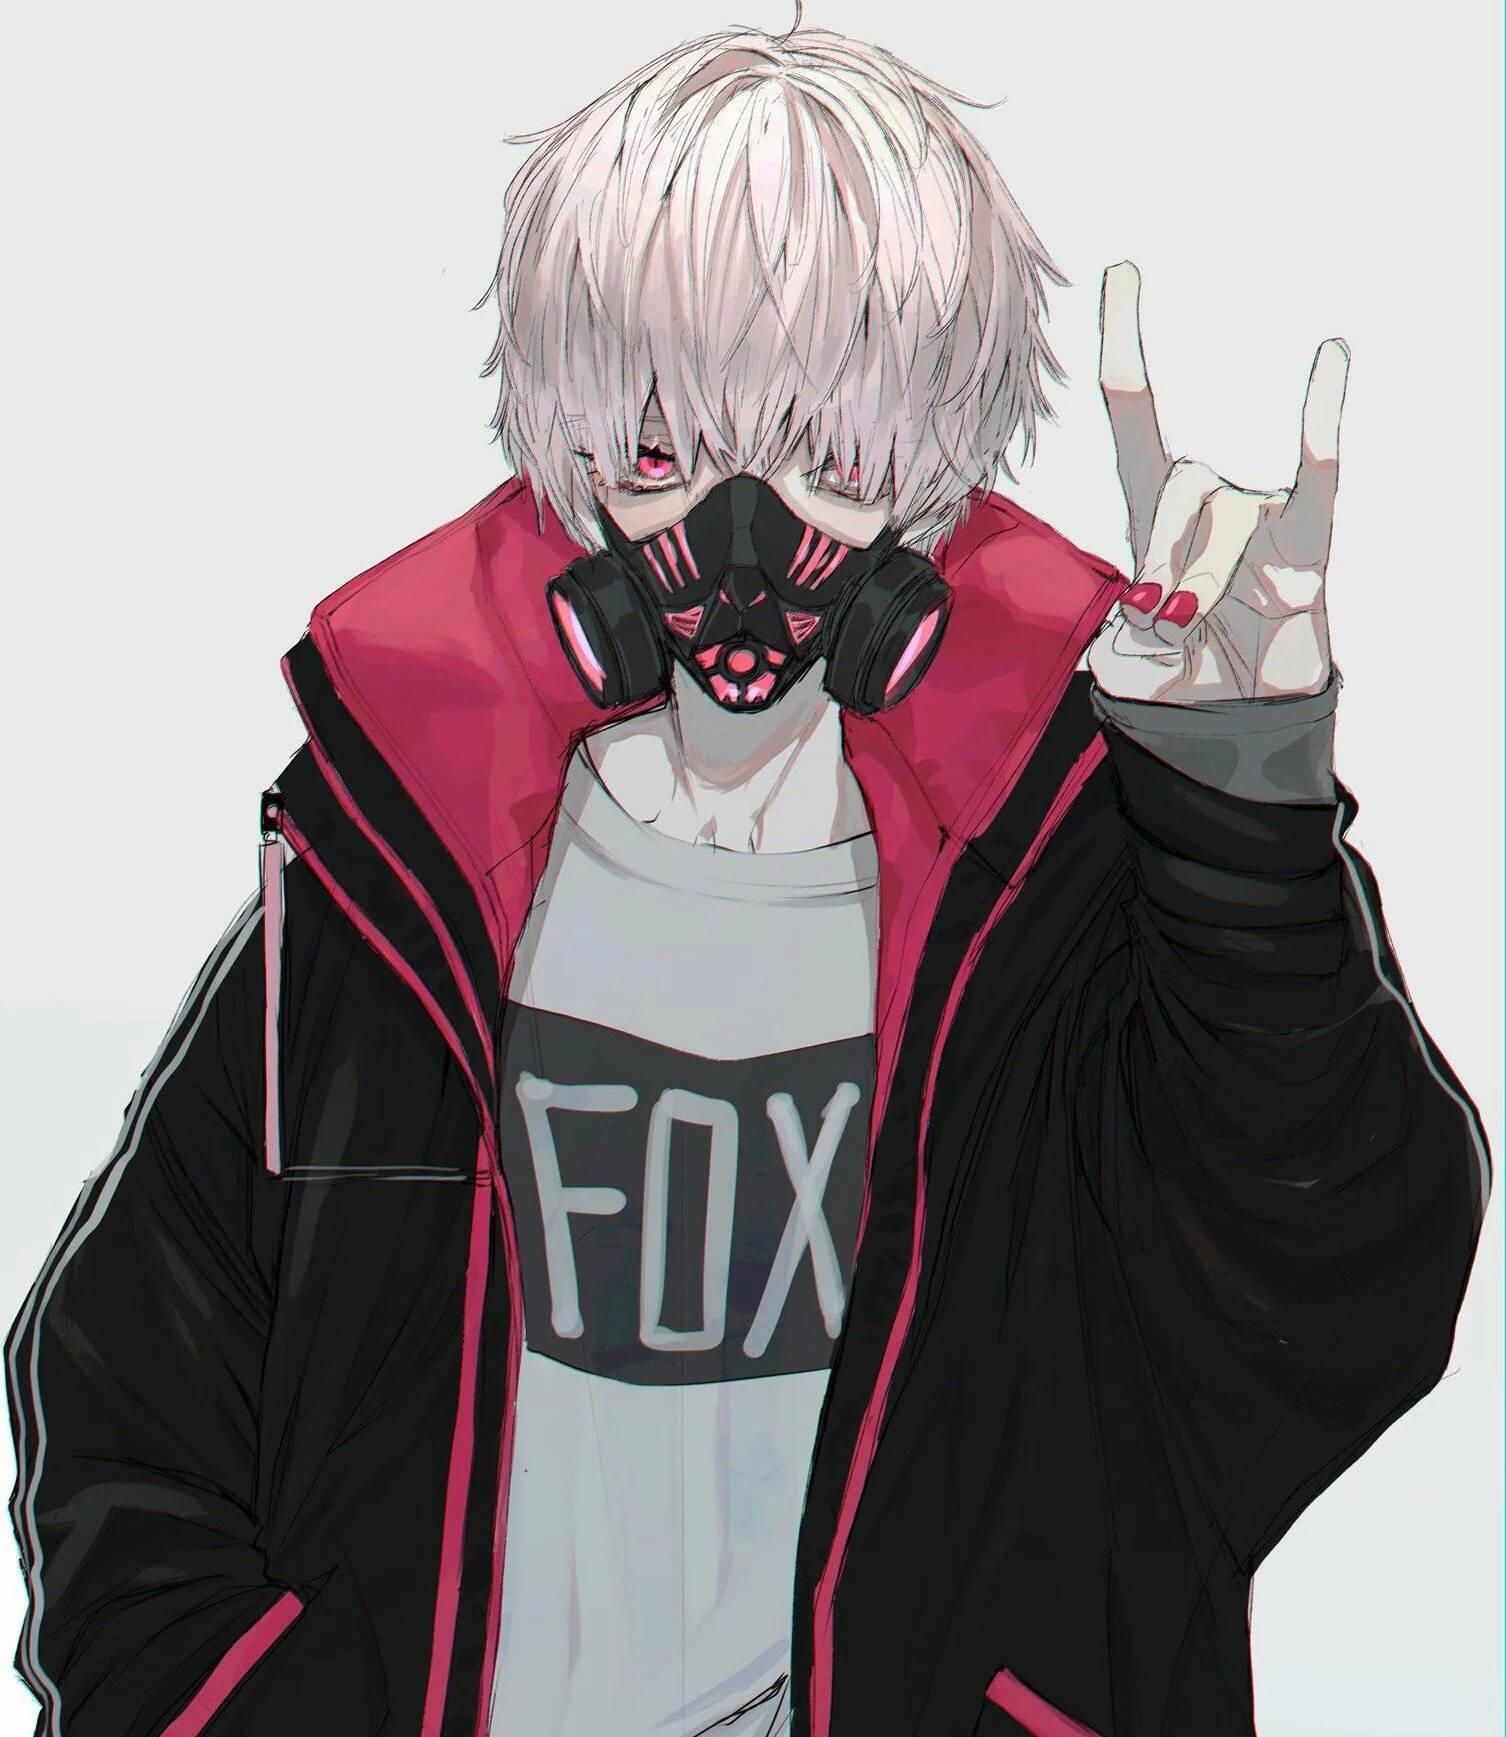 Anime Boy Gaming With Guy Wearing Mask Wallpaper